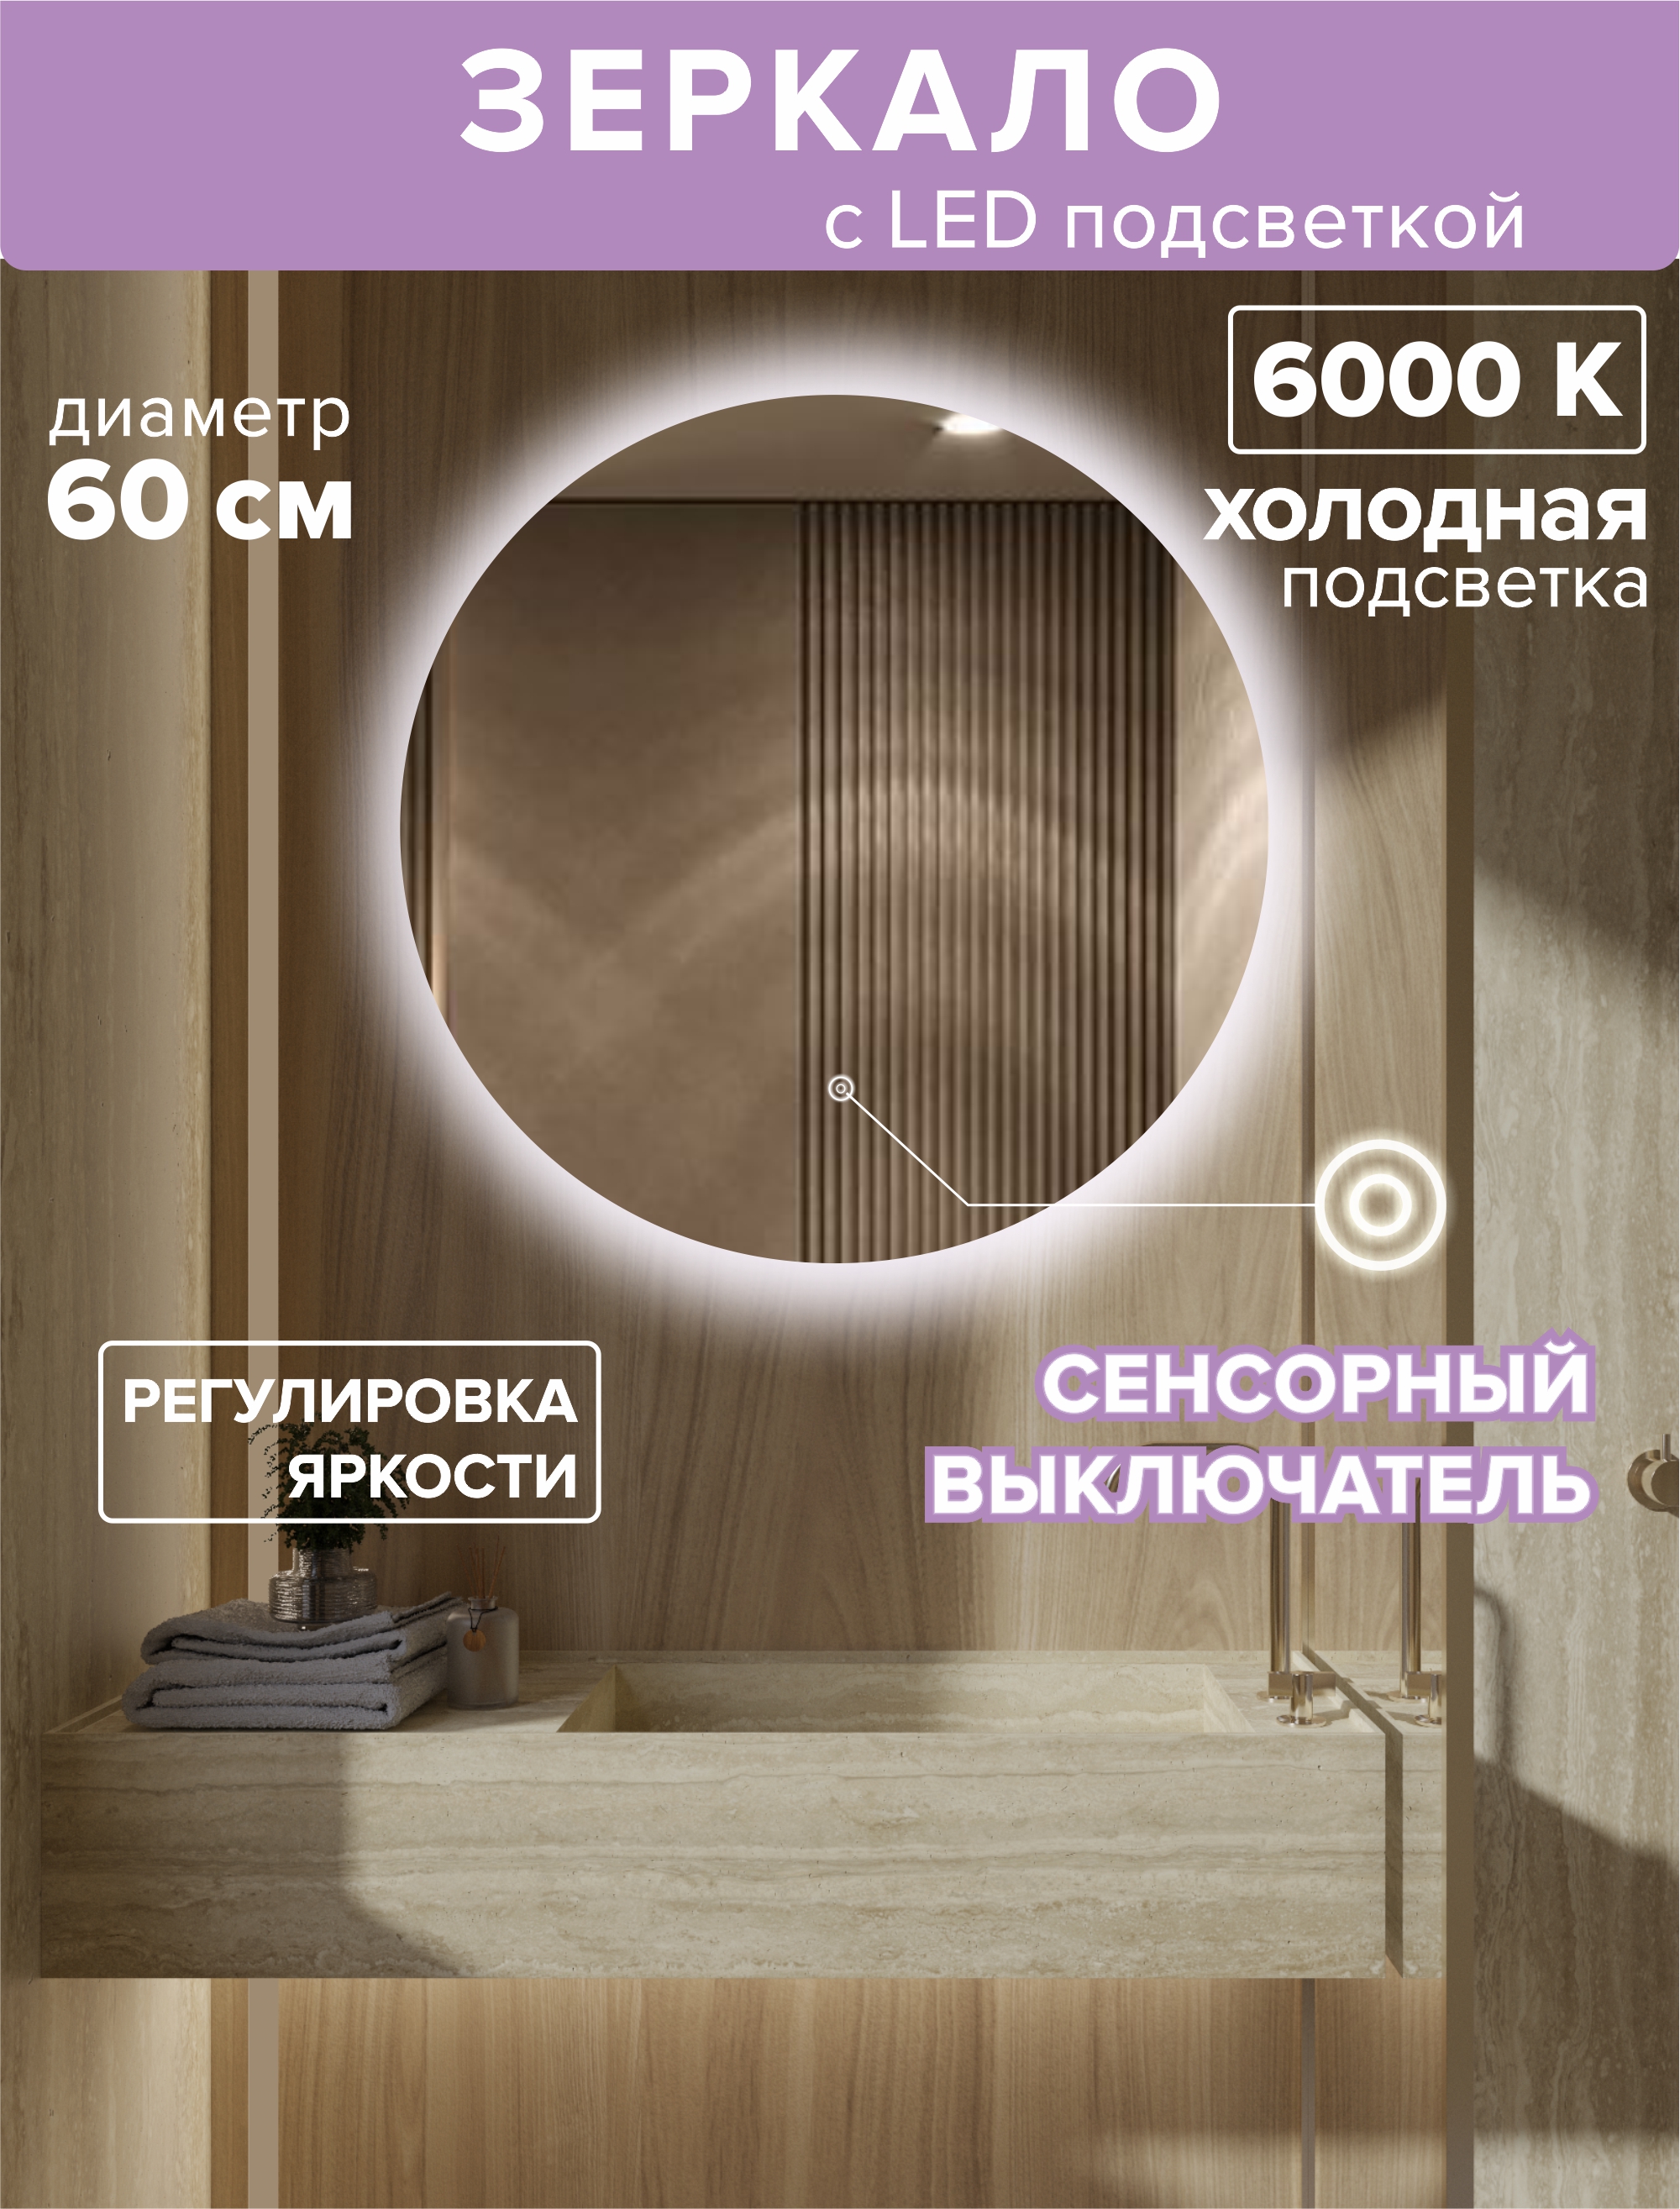 Зеркало для ванной Alfa Mirrors с холодной подсветкой 6500К круглое 60см, арт. Na-6h зеркало круглое парящее муза d90 для ванной с холодной led подсветкой